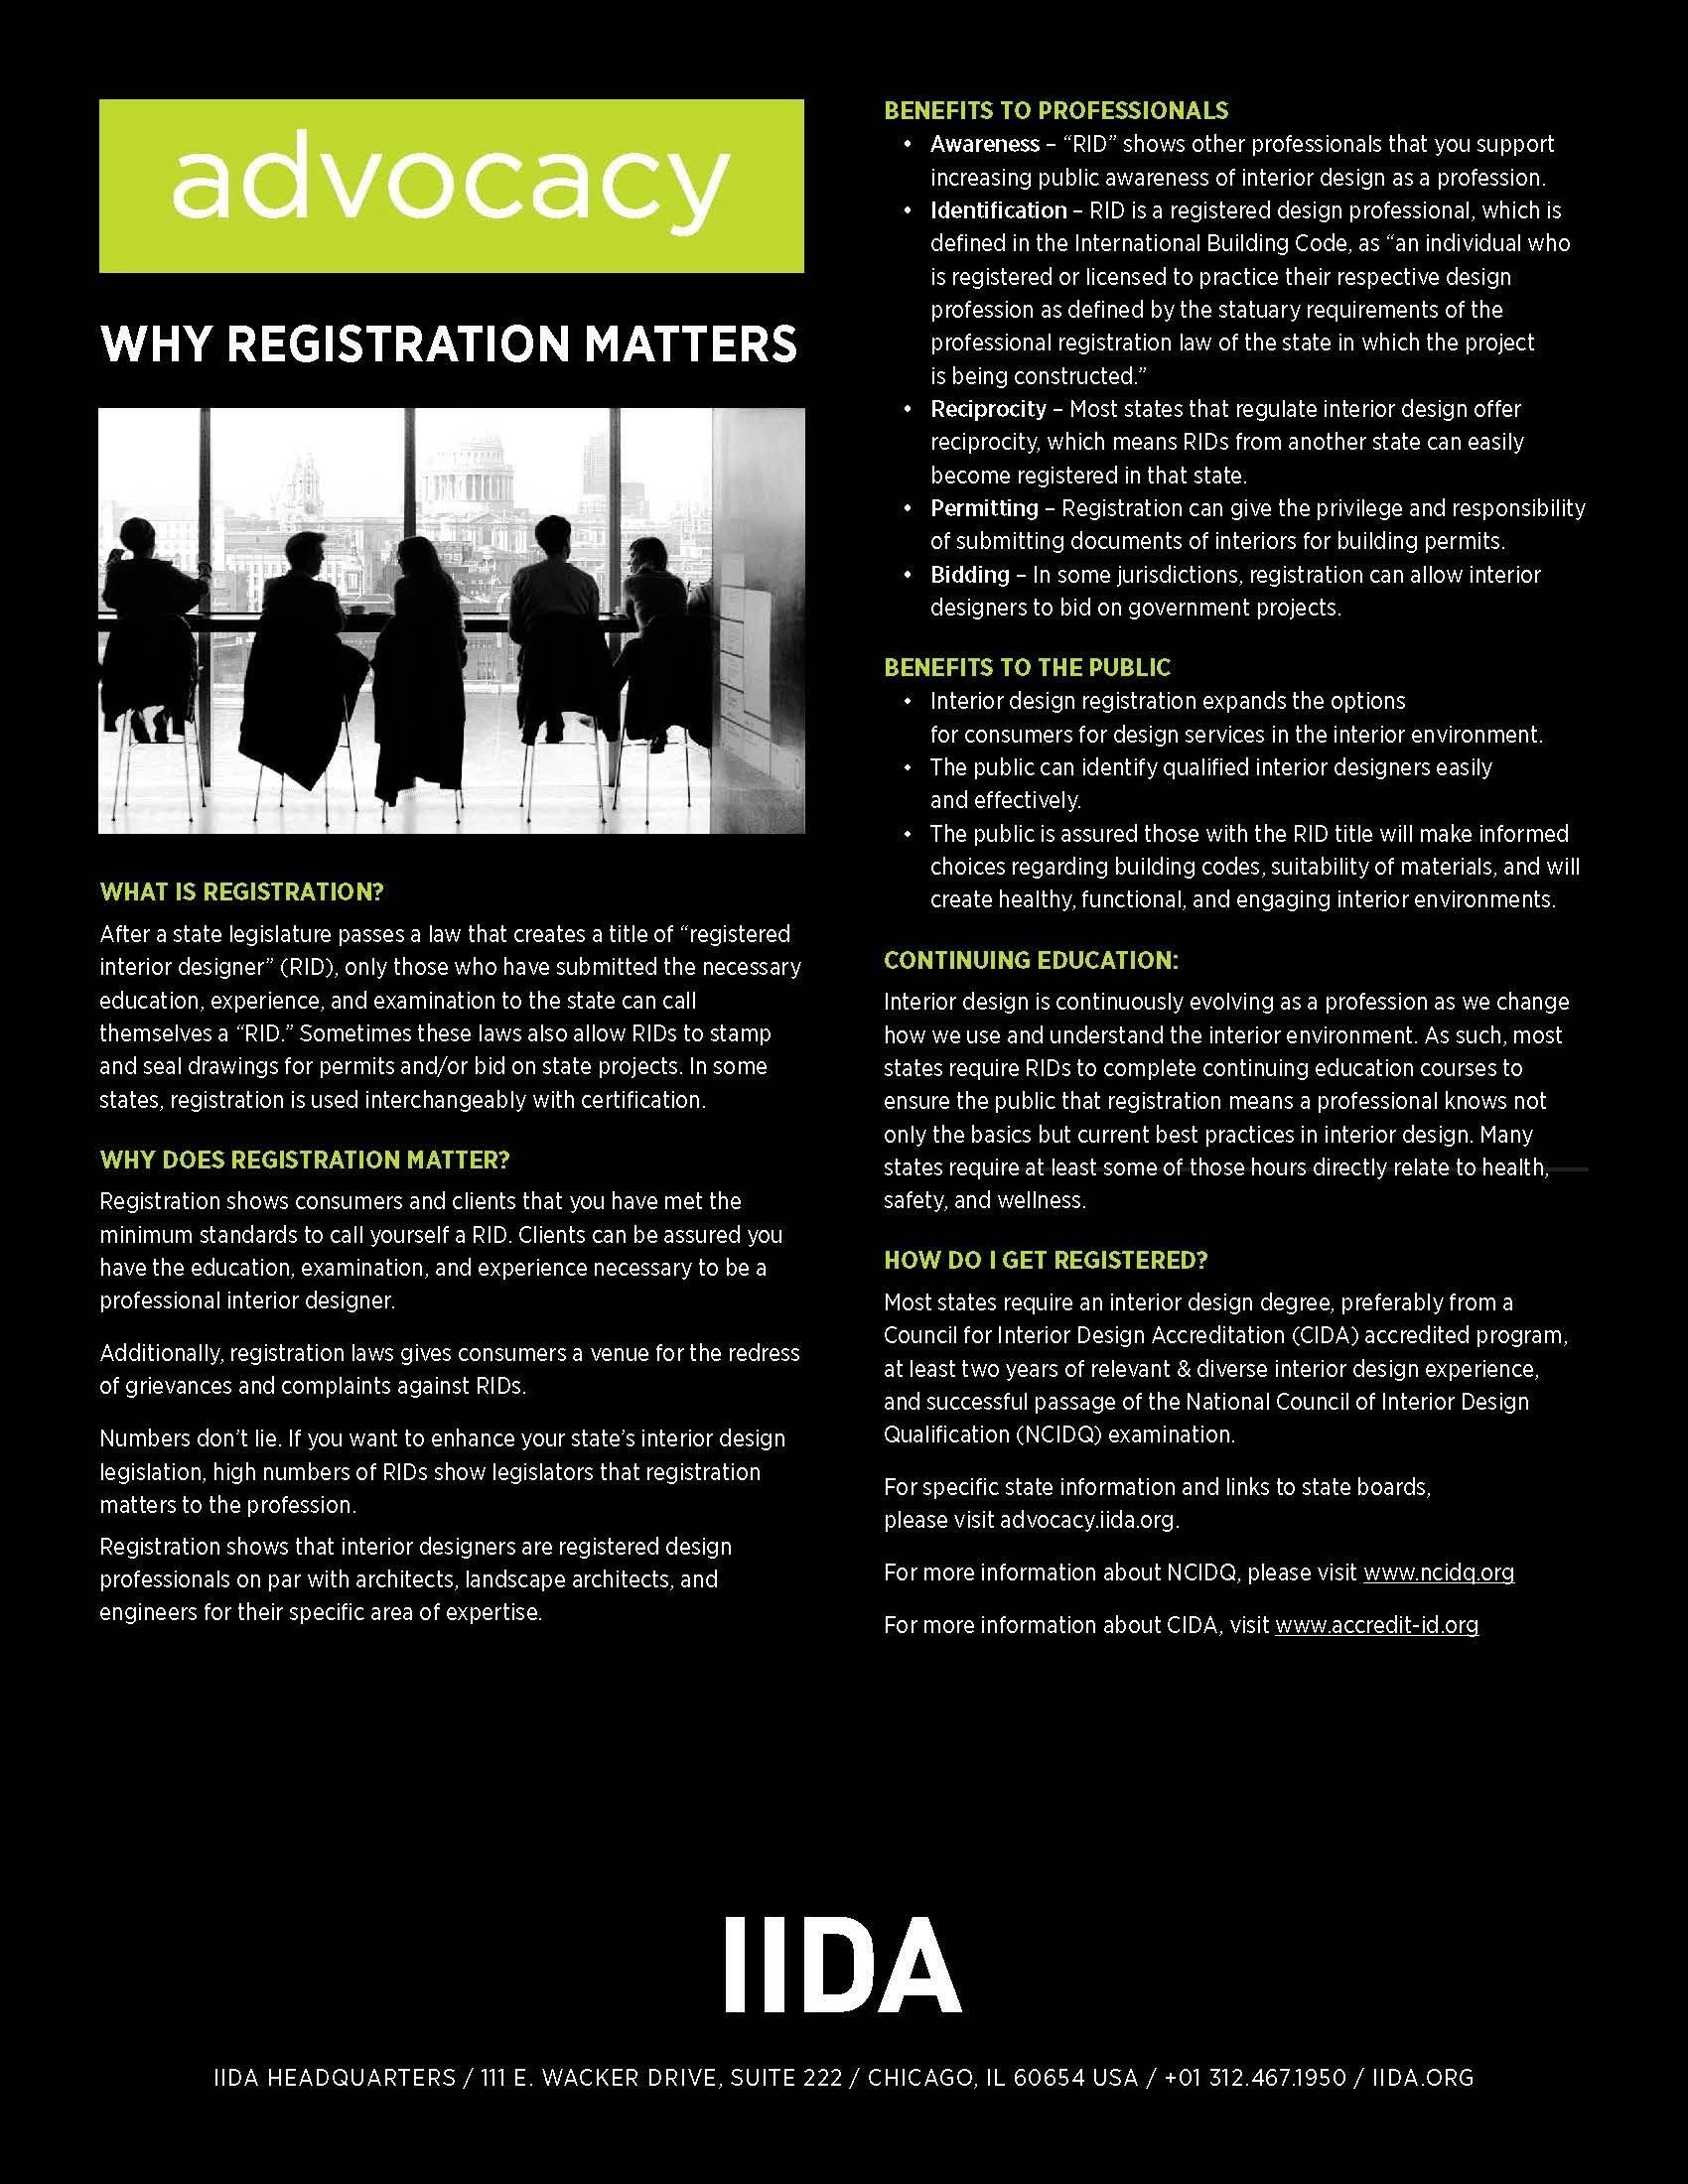 IIDA Interior Design Why Registration Matters